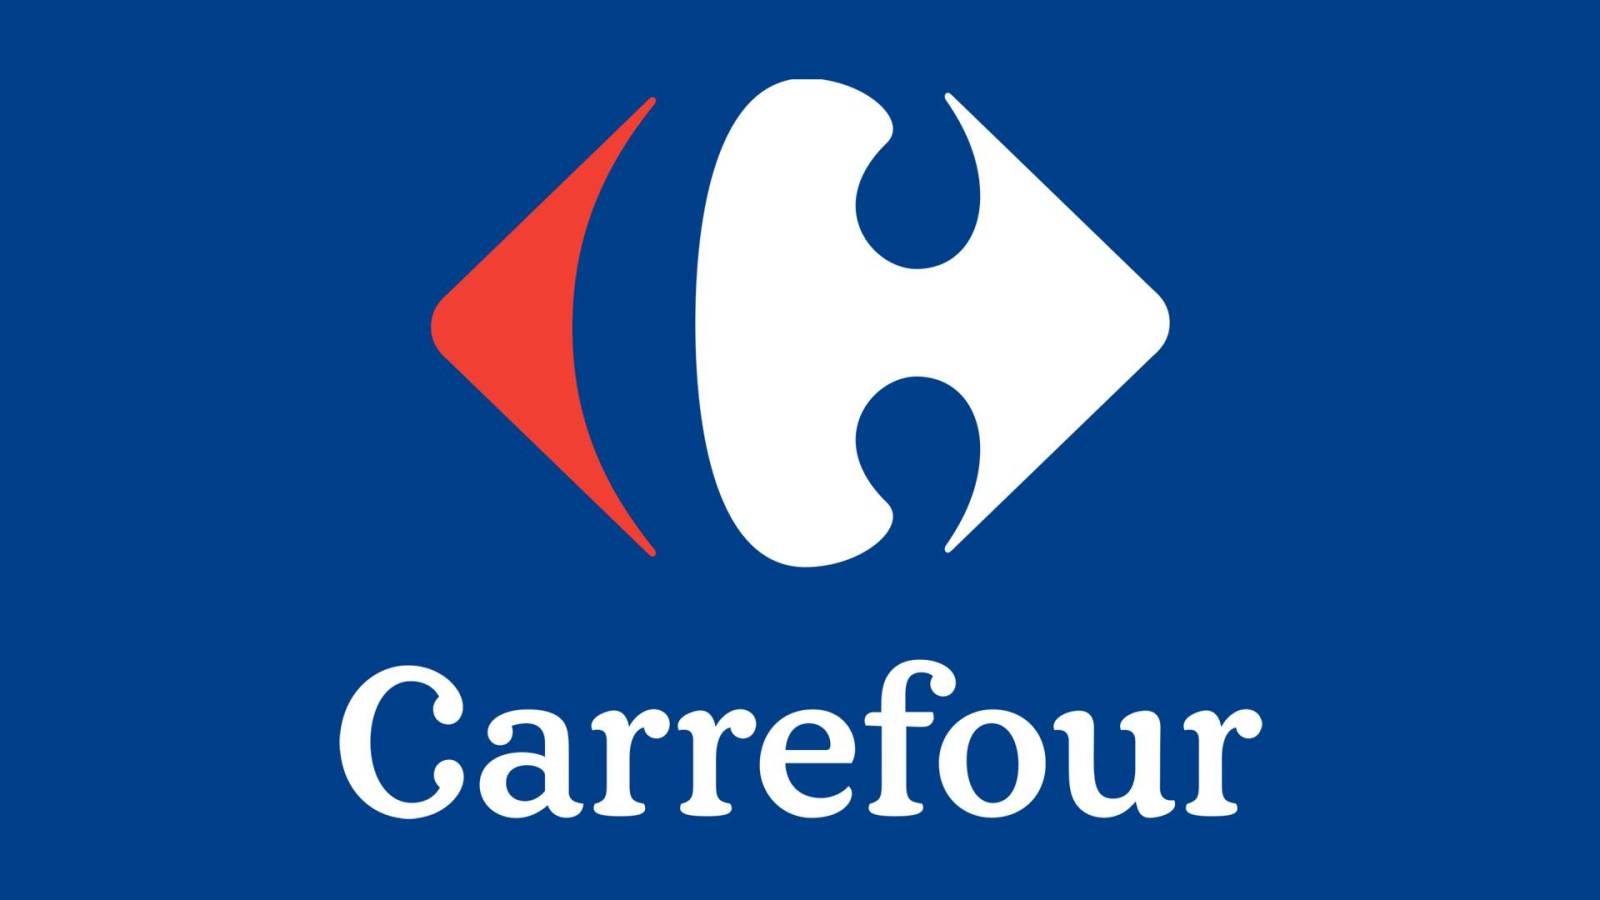 Good luck Carrefour